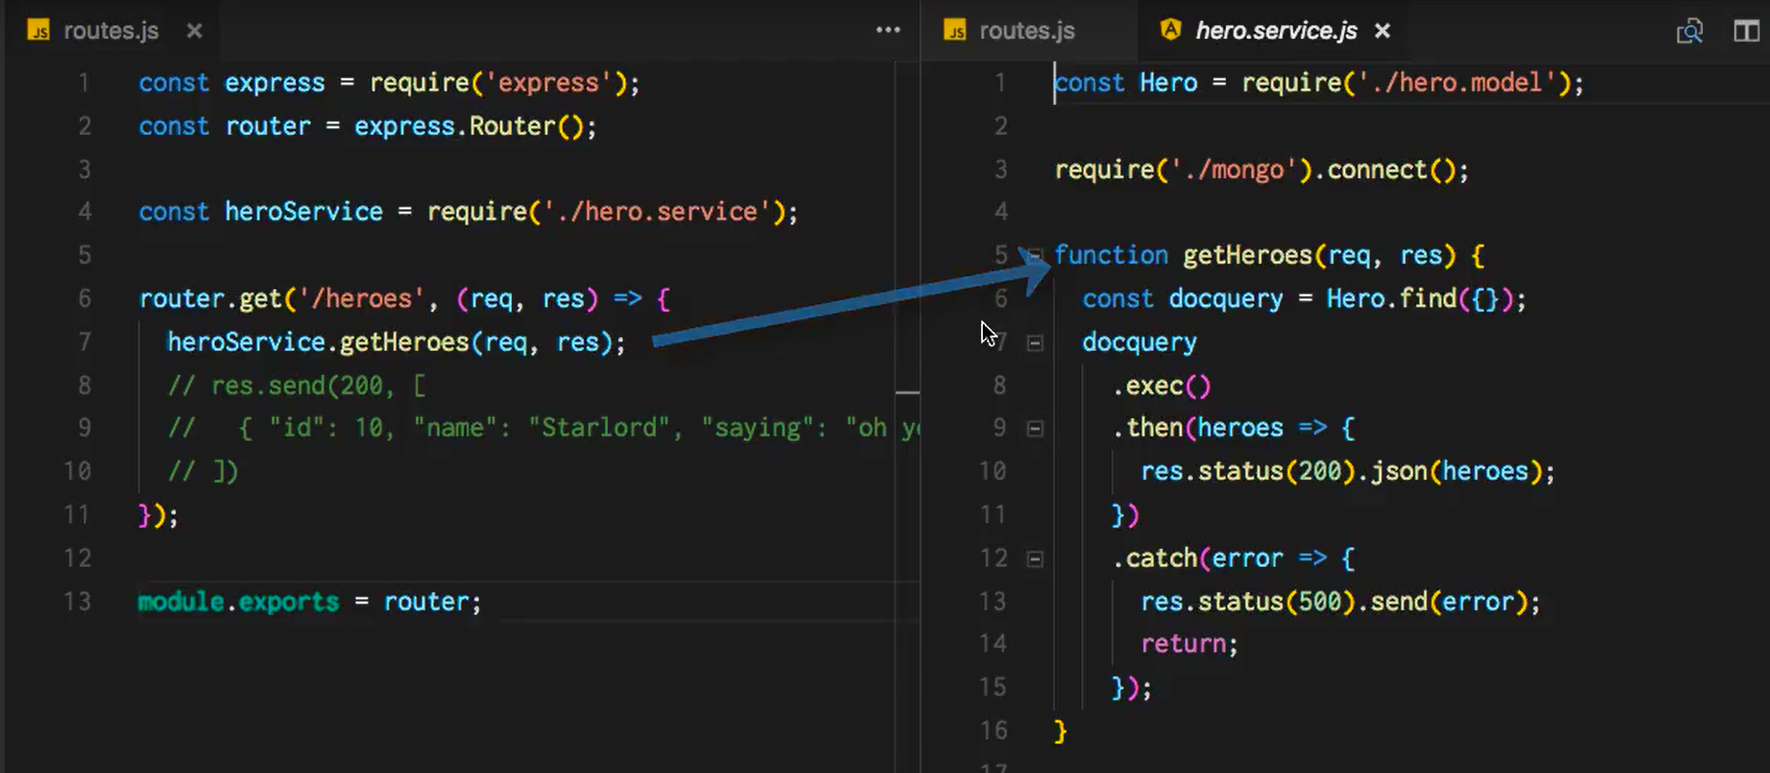 Visual Studio Code で routes.js と hero.service.js を表示したところ